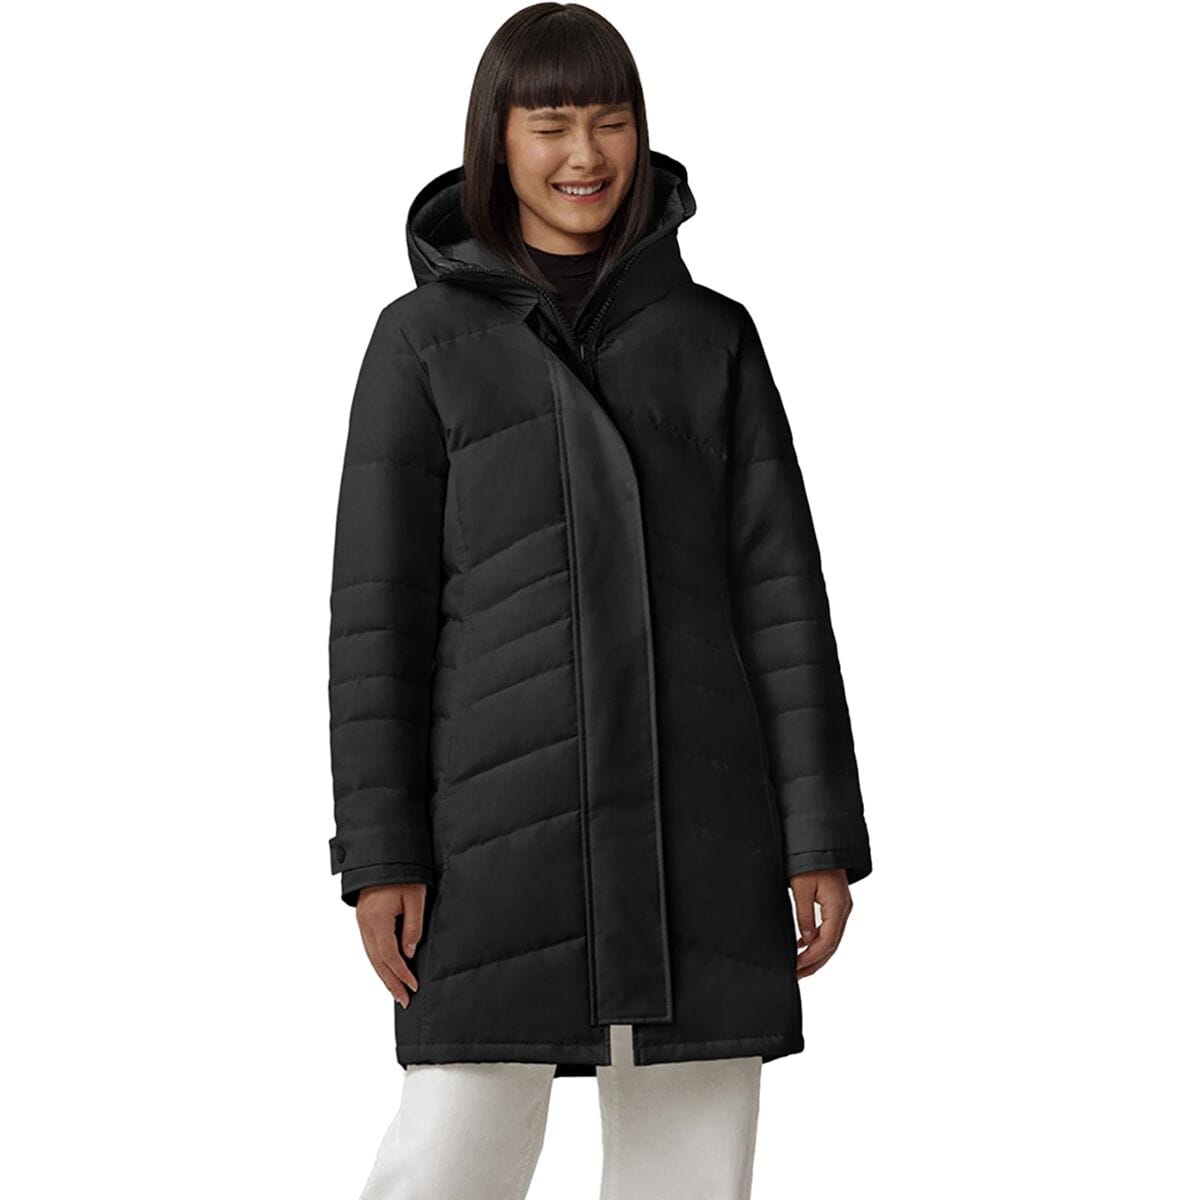 Canada Goose Jackets, Coats, Parkas - Women's